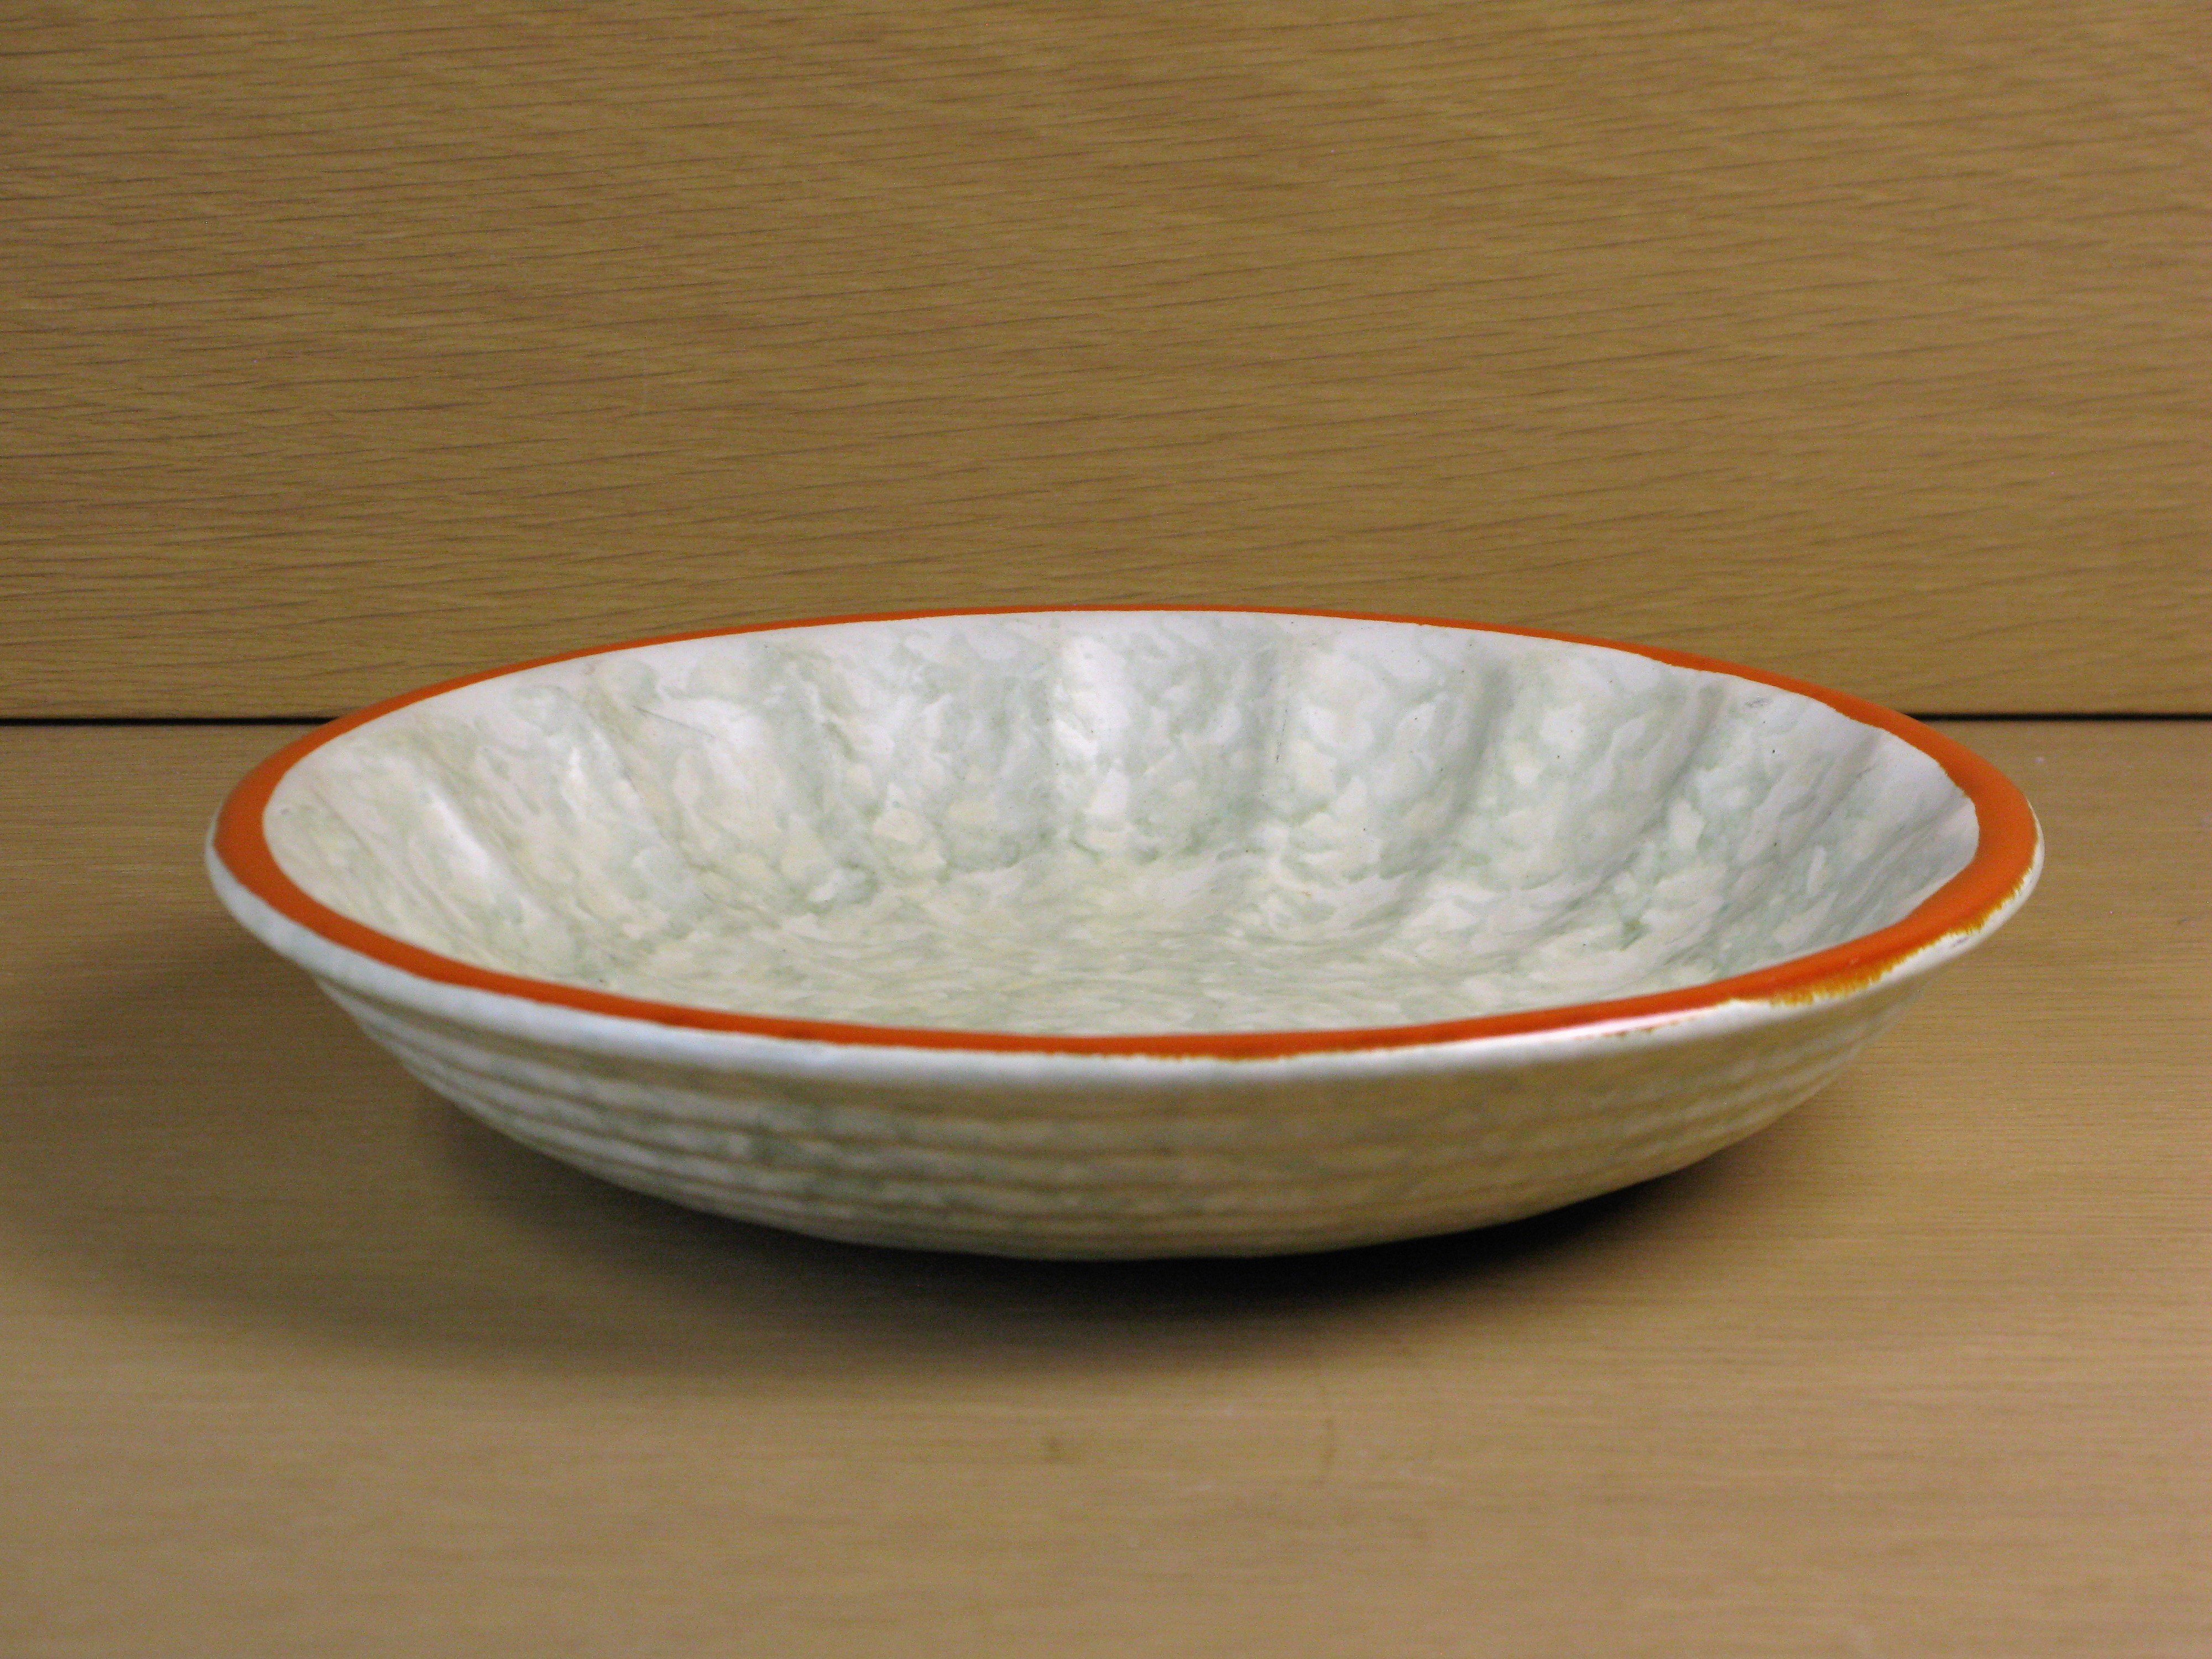 greyish and orange bowl 78